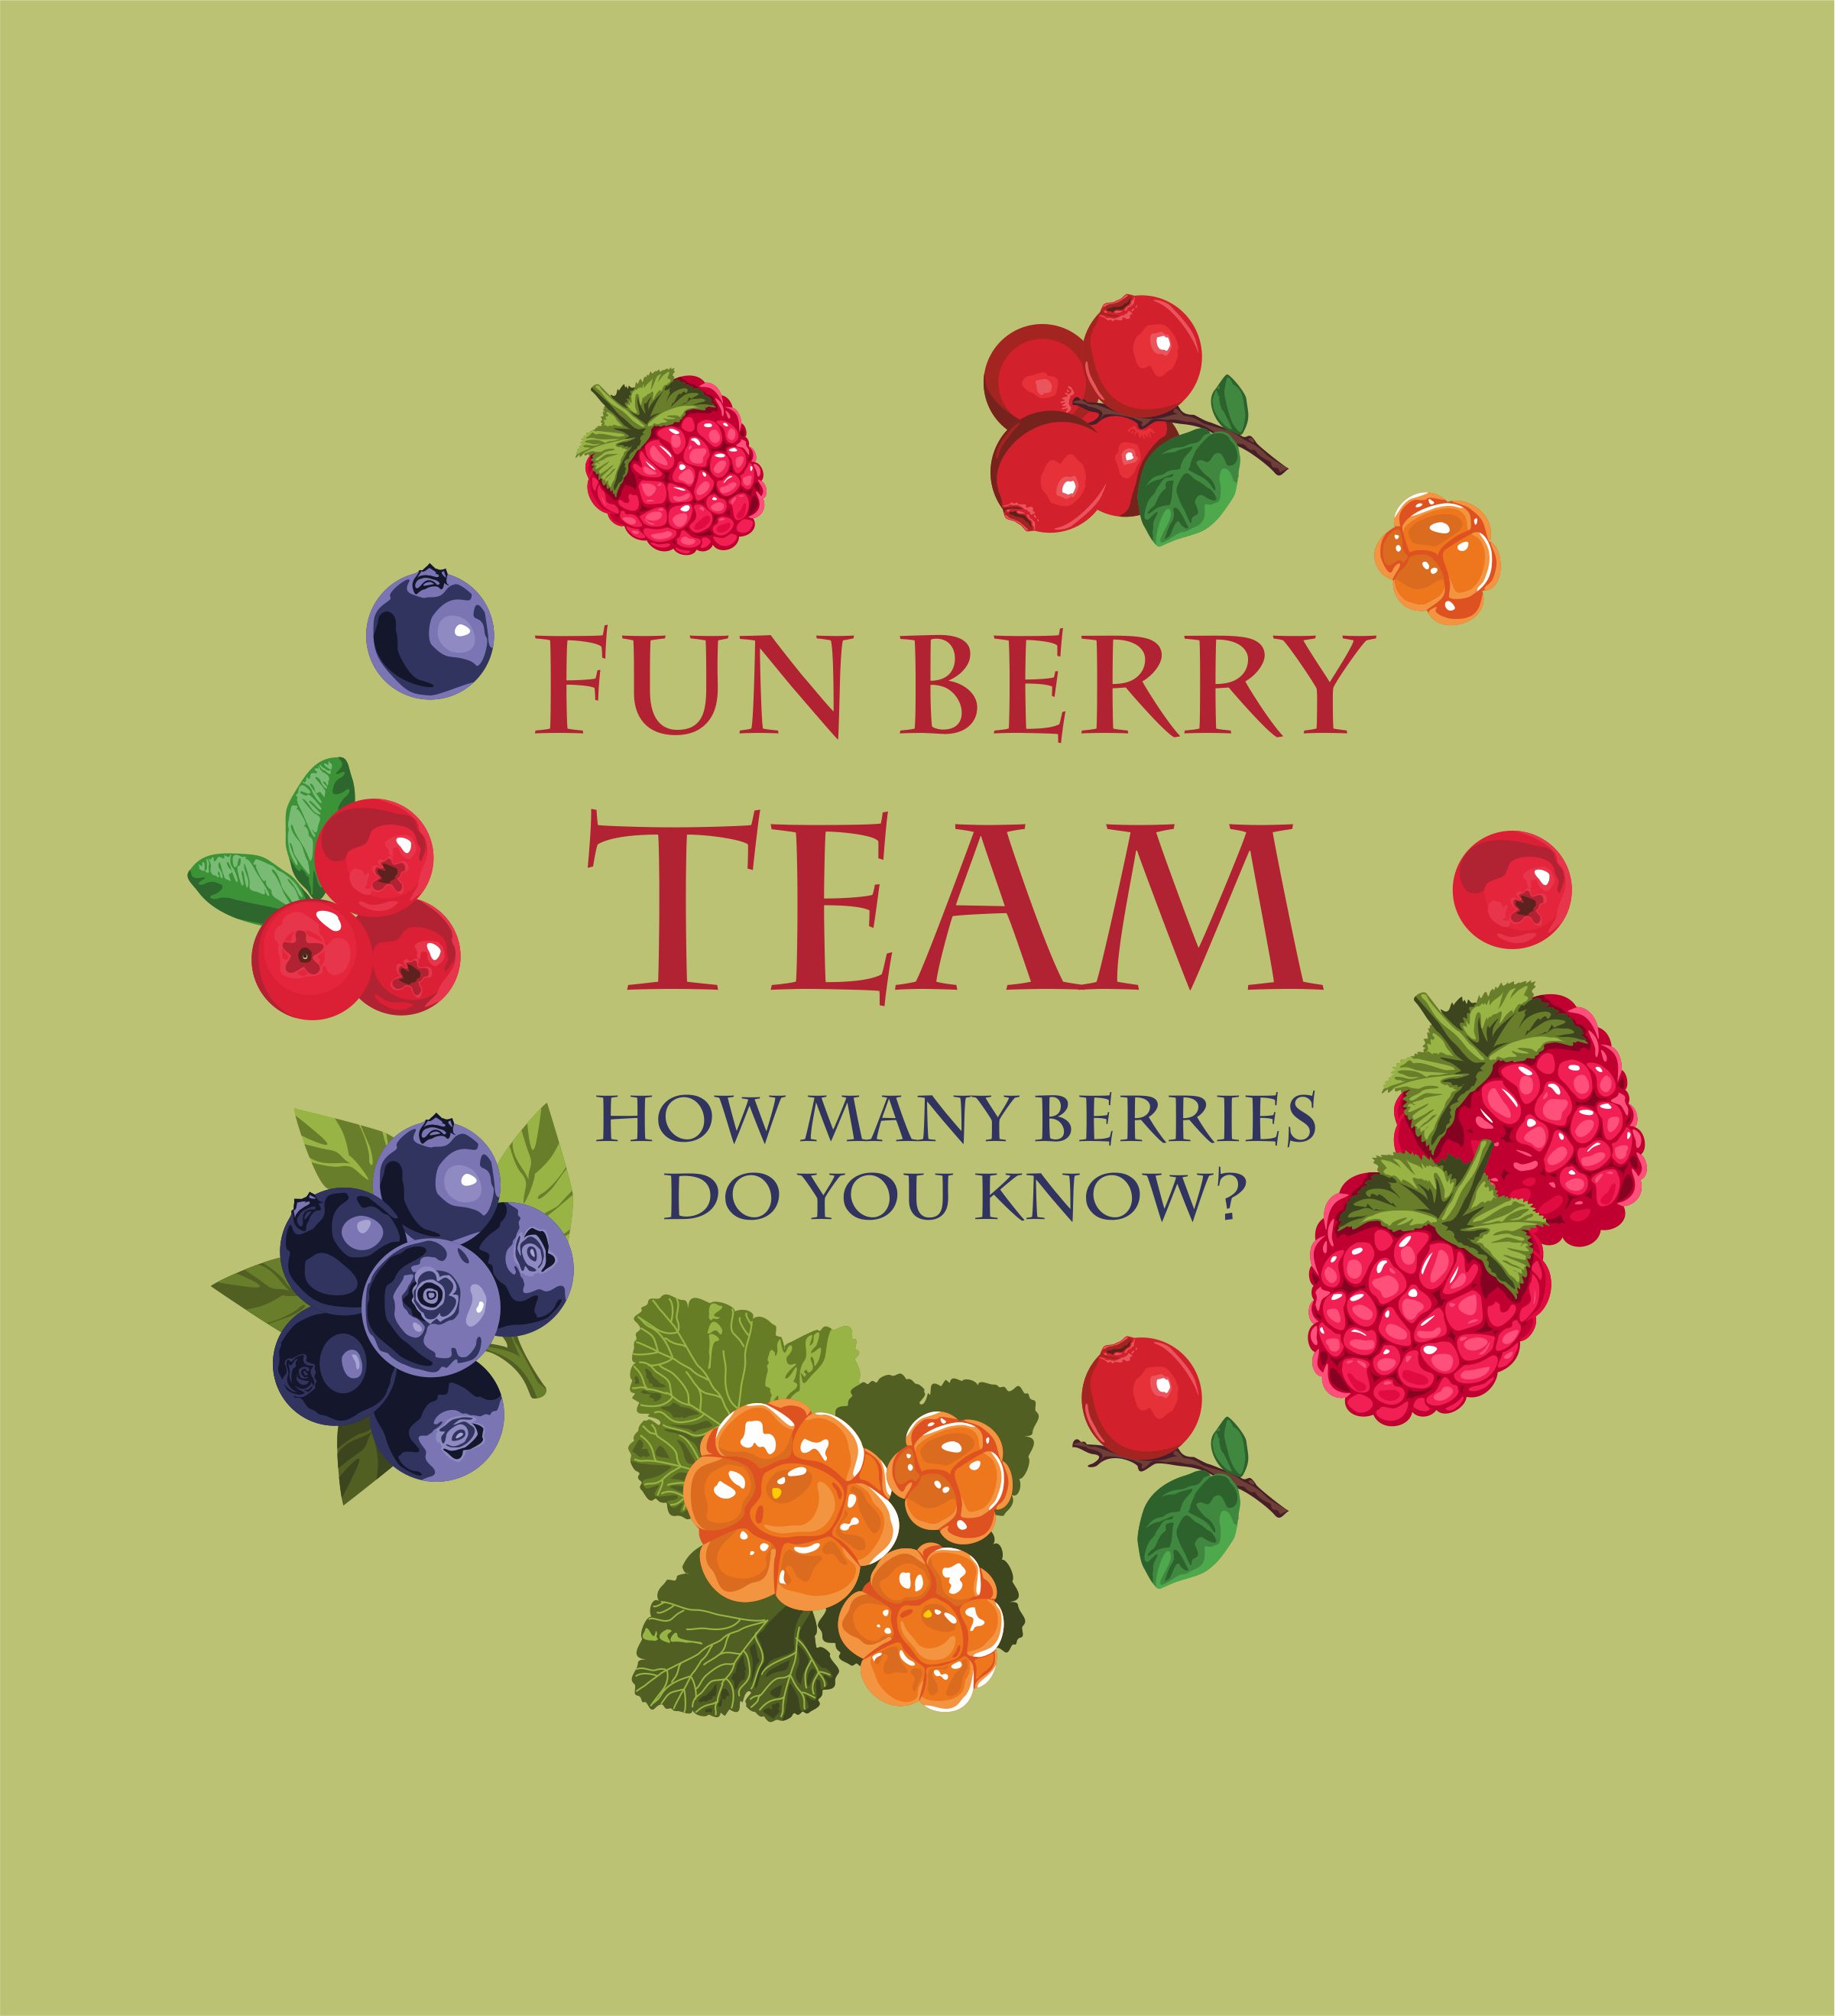 Fun berry team2